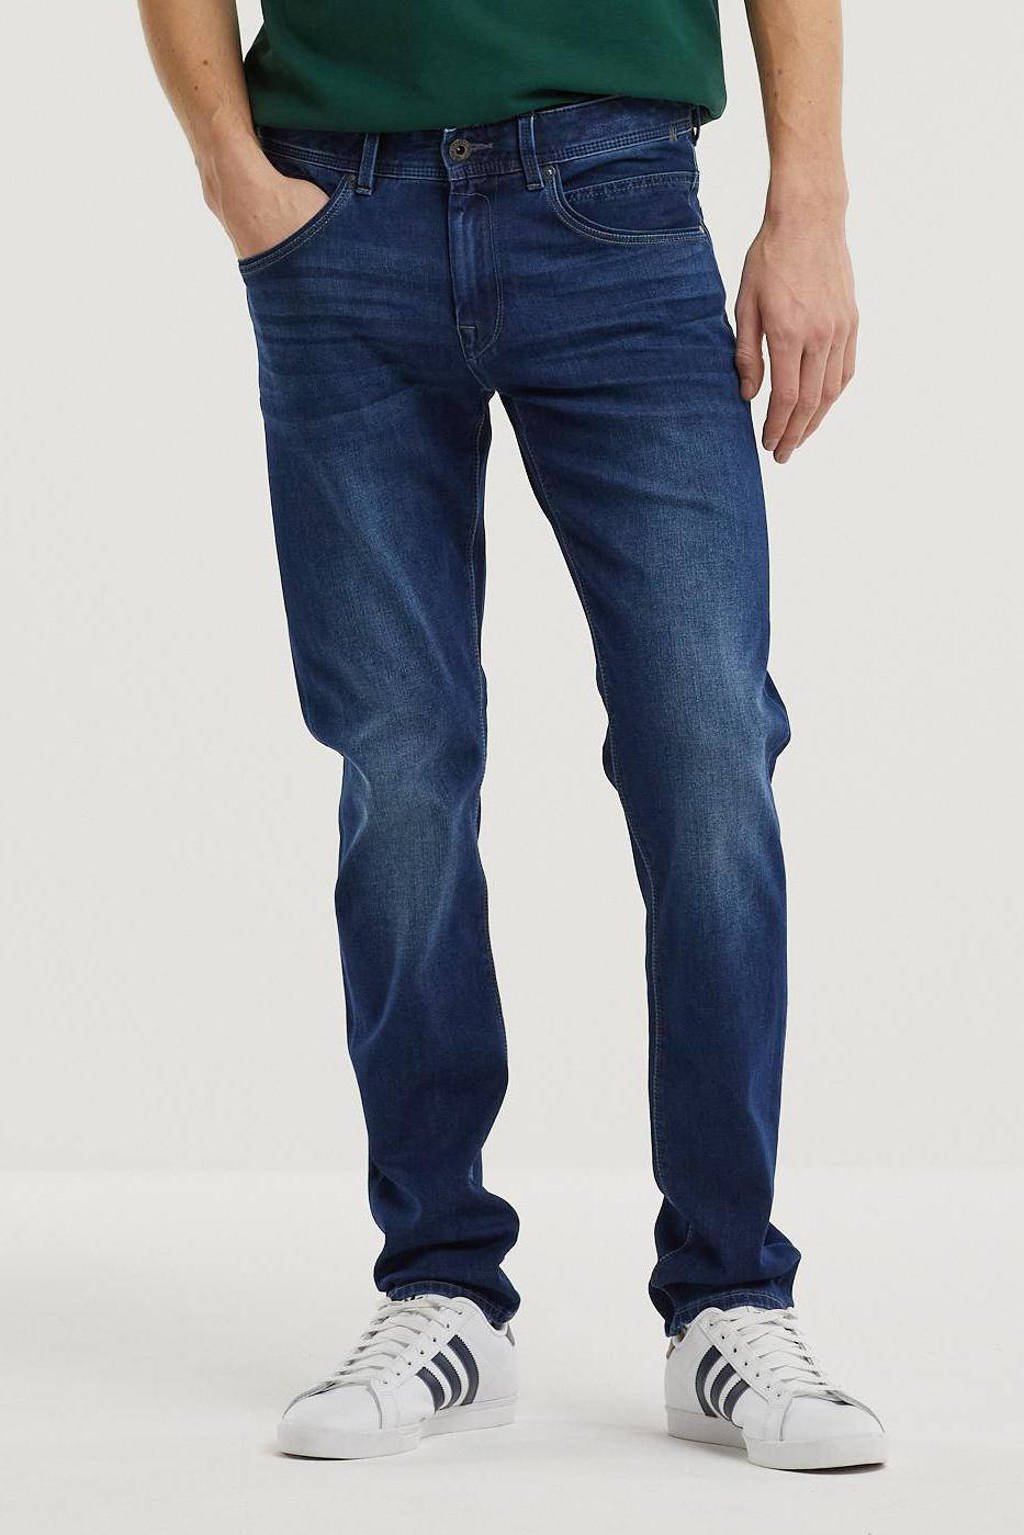 Vanguard slim fit jeans V850 RIDER 4  dark denim, Dark denim